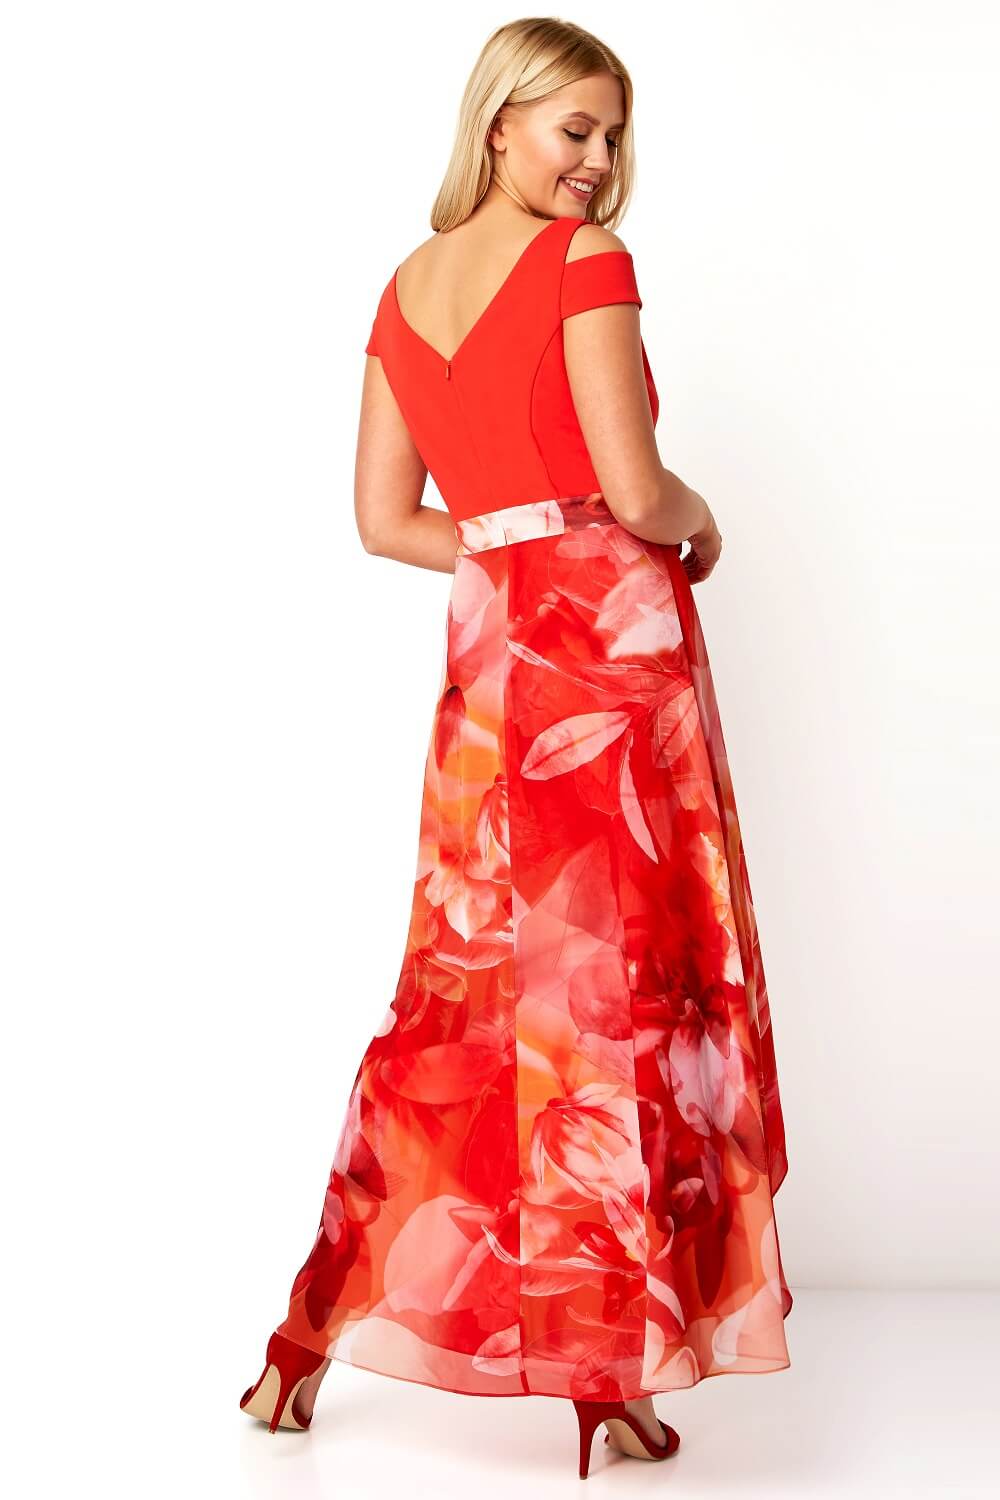 CORAL Floral Print Cold Shoulder Maxi Dress, Image 2 of 4